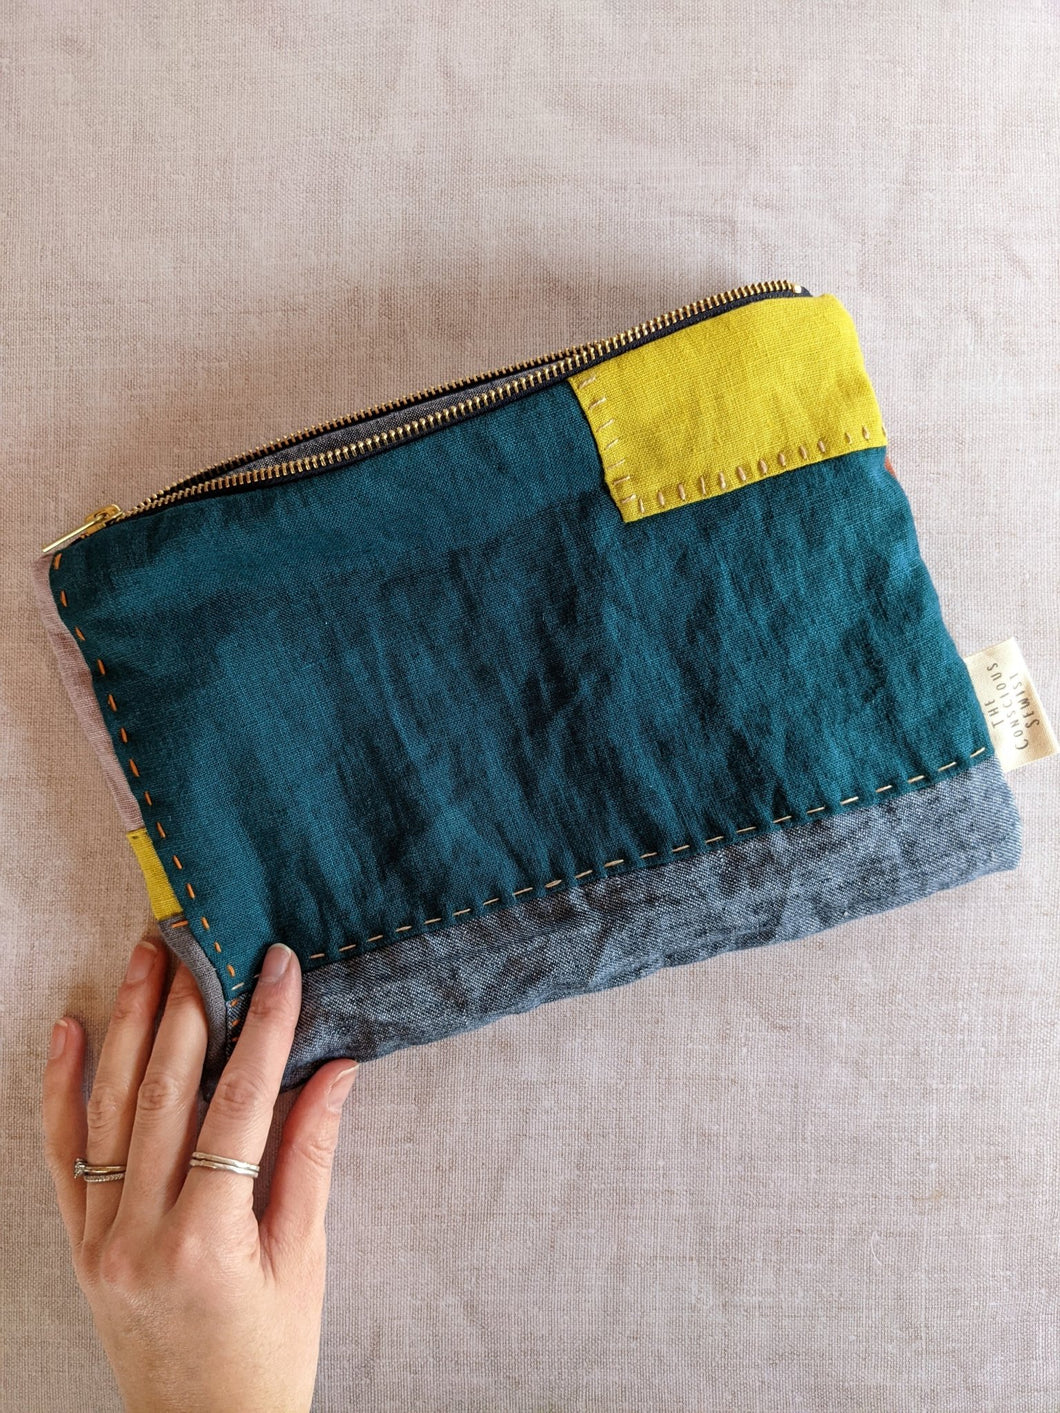 Hand Sewn Linen Zip Bag - A - Accessories - The Conscious Sewist - accessories - Make-up bag